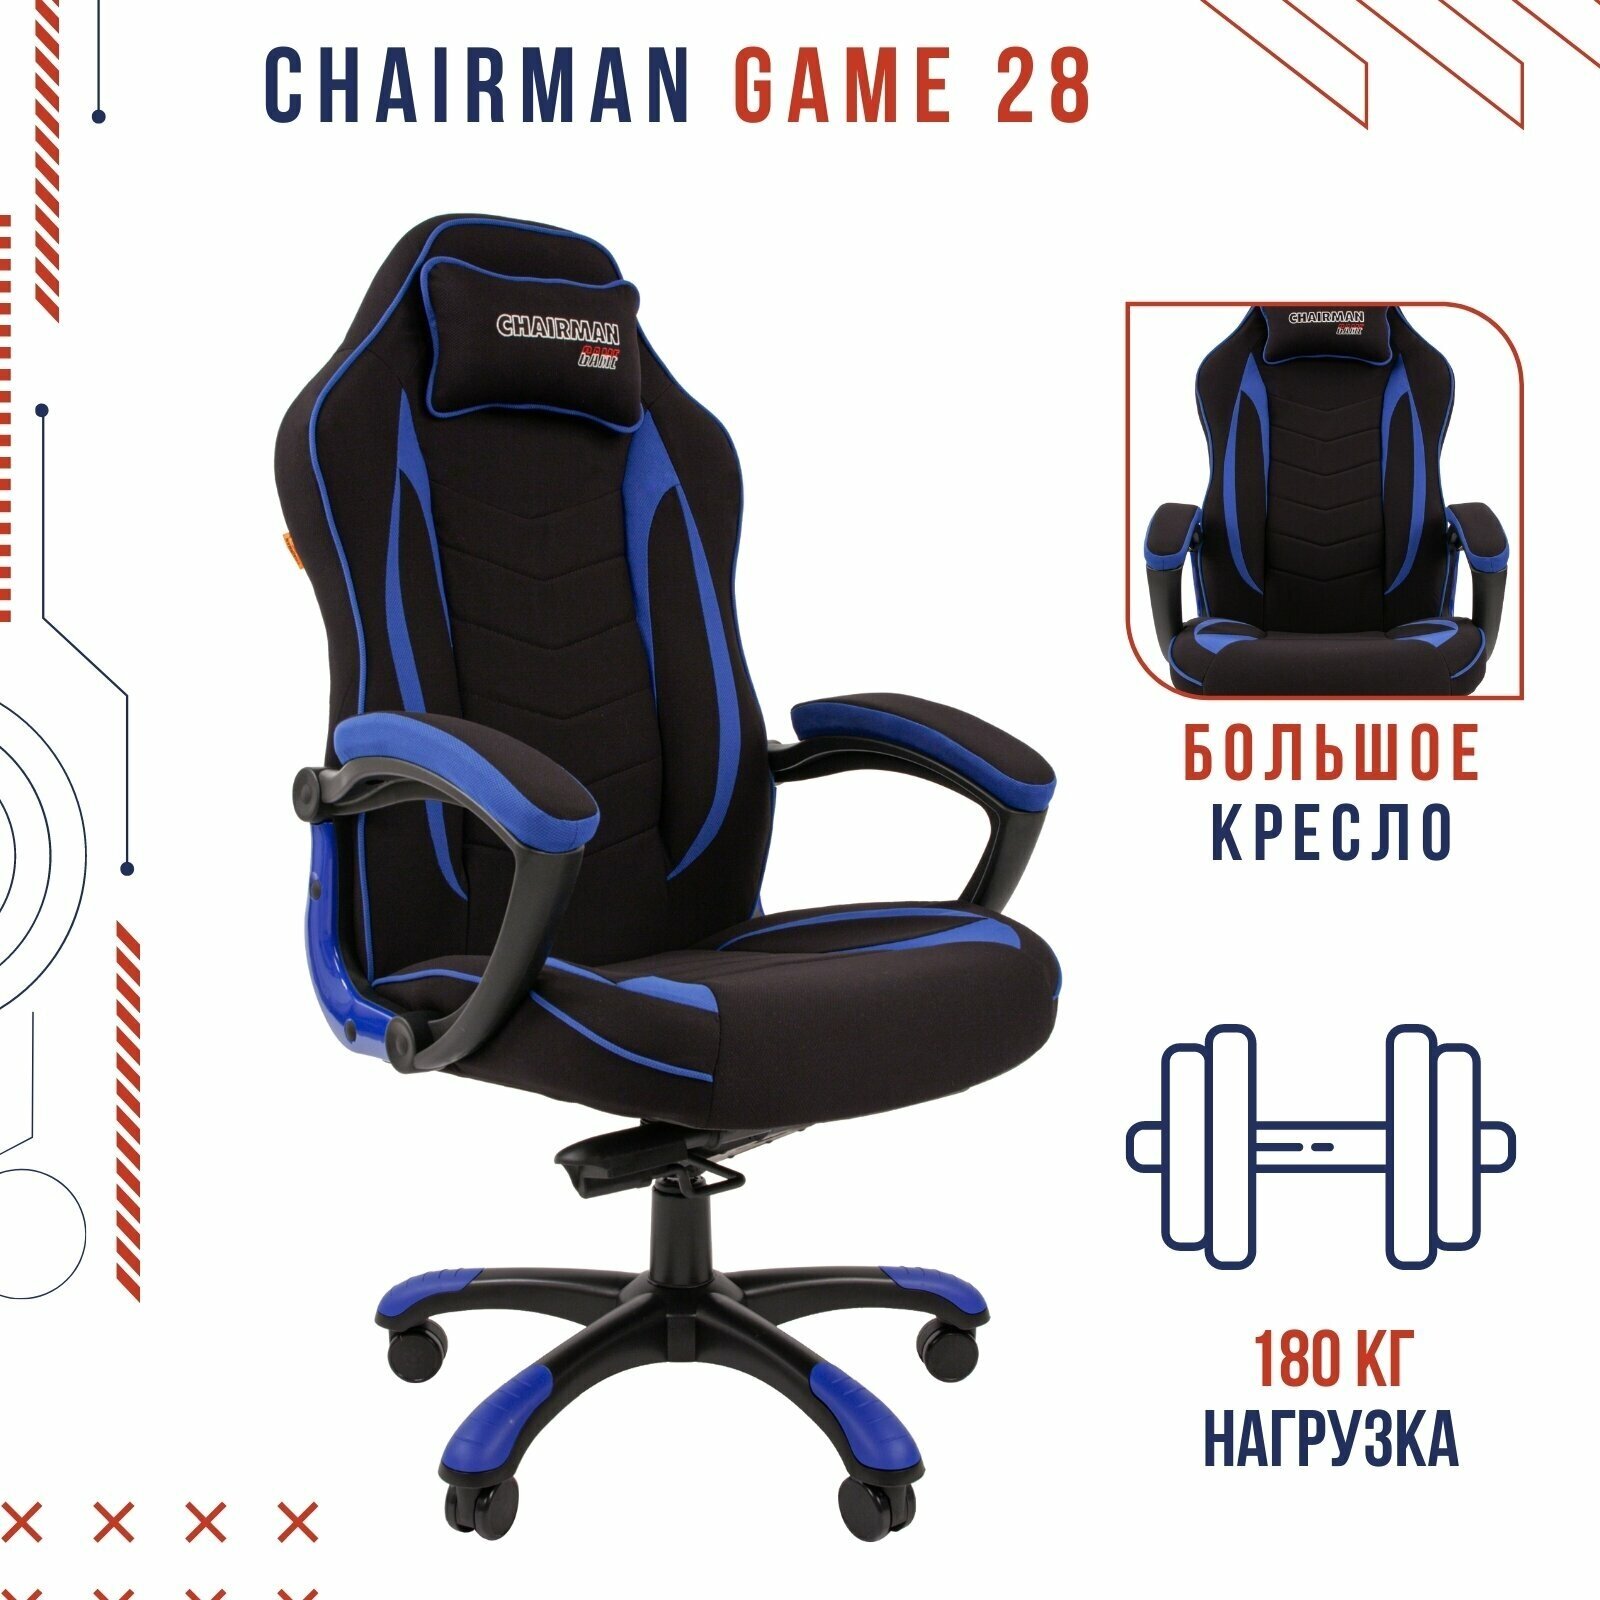 Кресло CHAIRMAN GAME 28